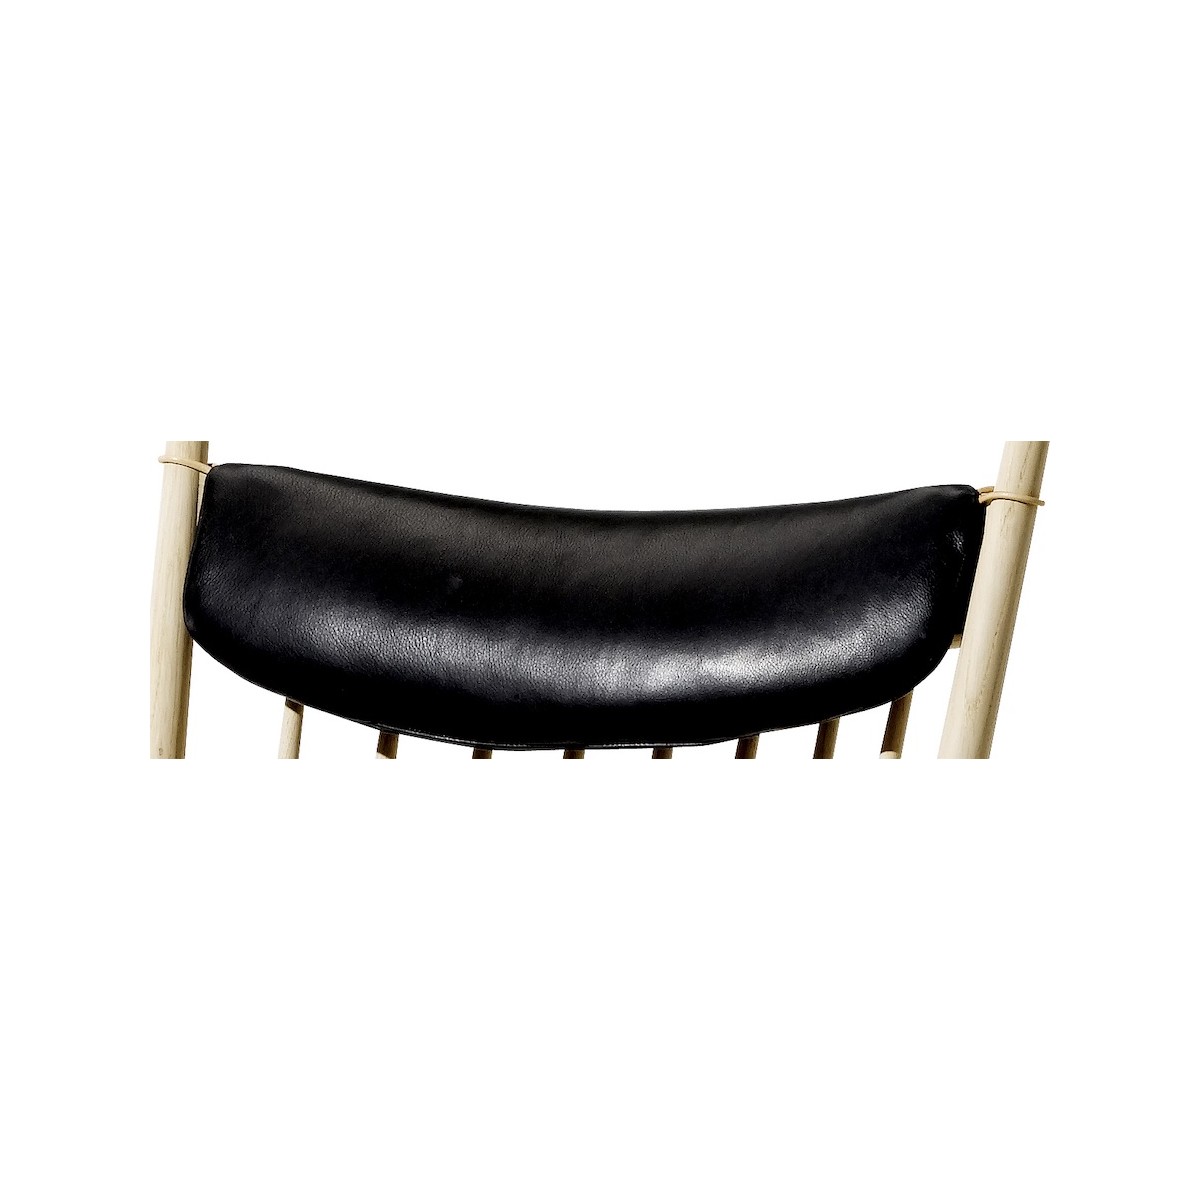 Max black leather – Neck cushion – J16 rocking chair